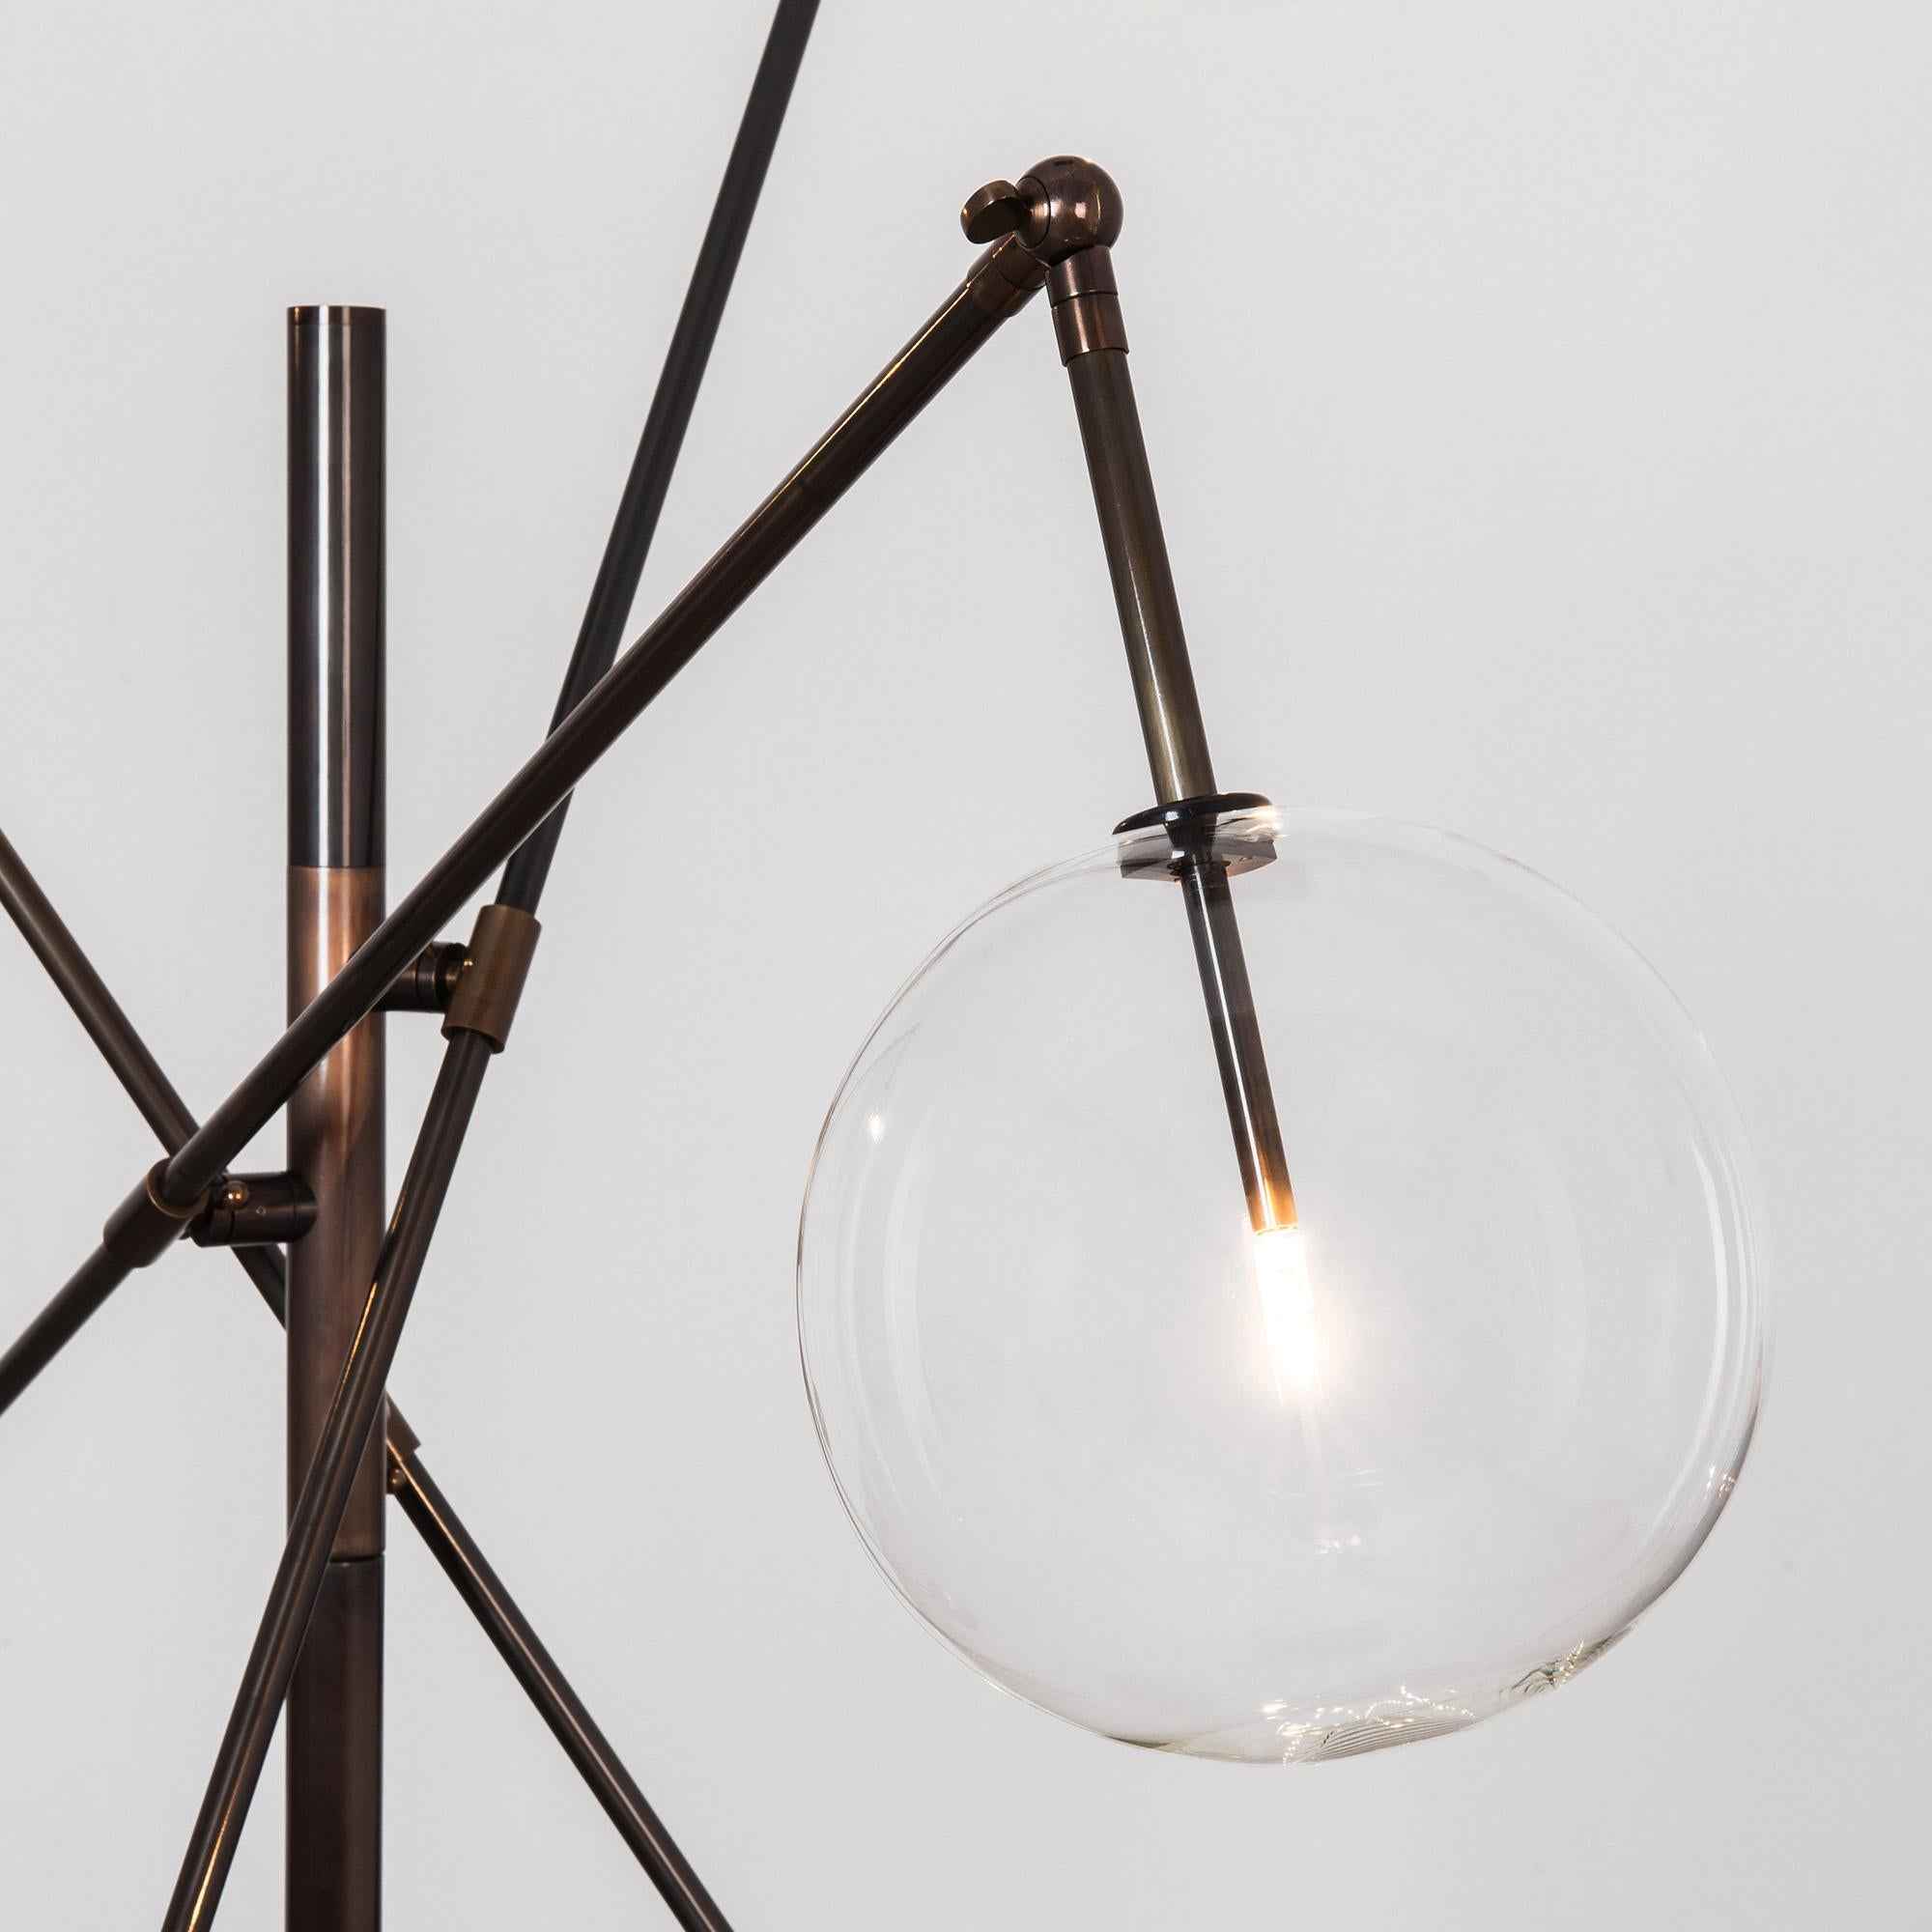 Metal Milan 1 Arm Floor Lamp by Schwung For Sale